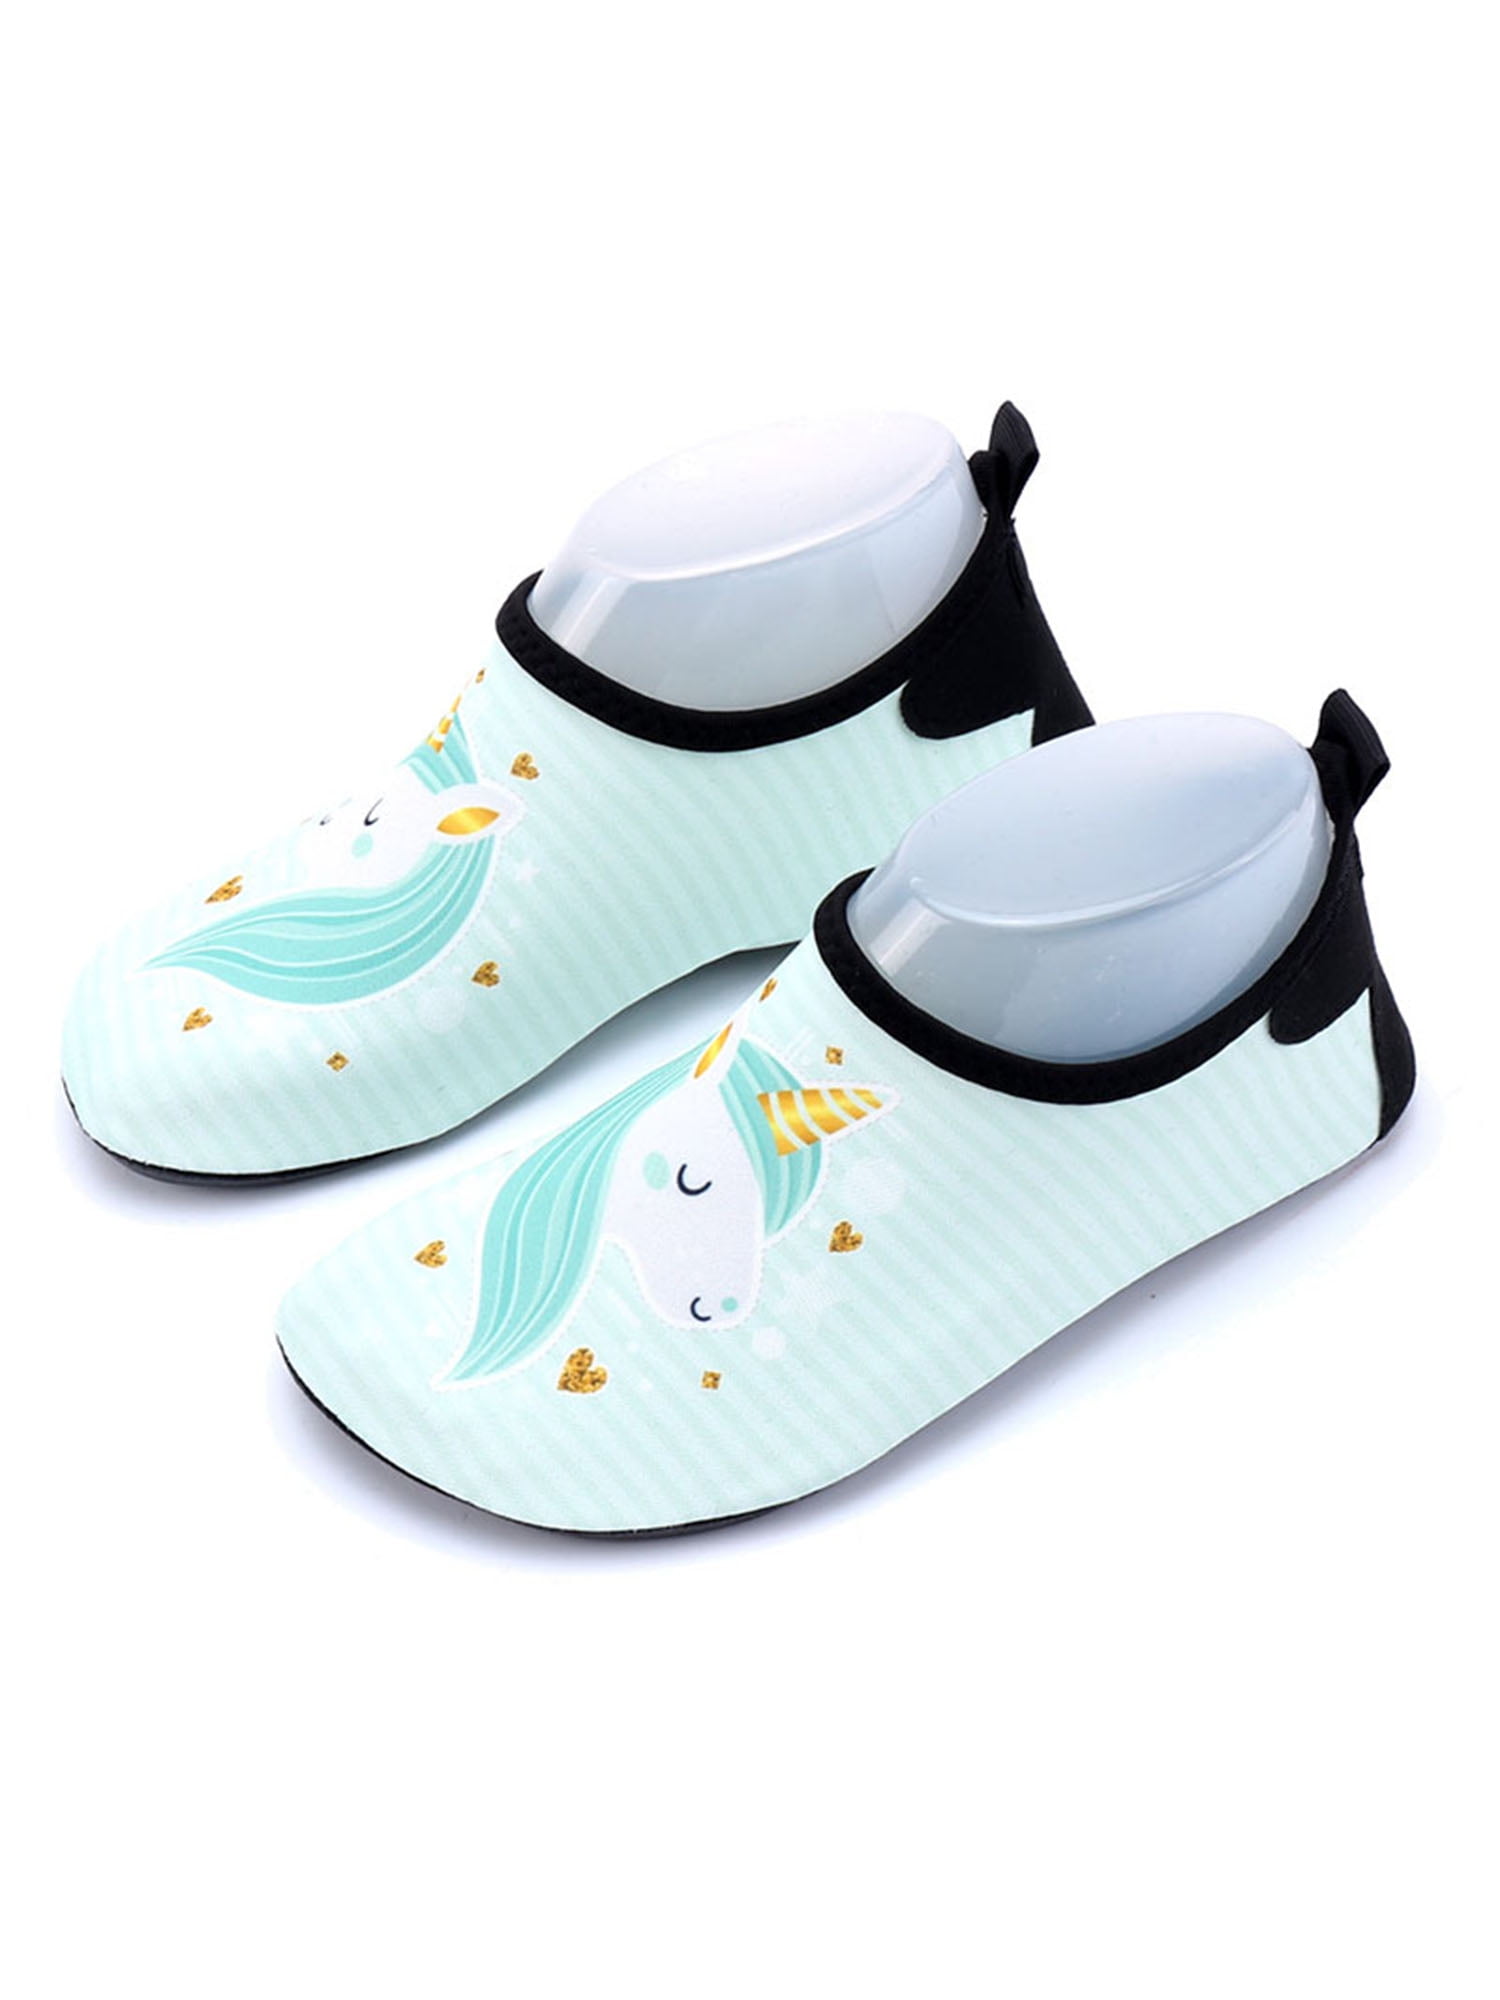 UK Baby Kids Child Water Shoes Aqua Socks Diving Rock Pool Beach Shoes Swim Slip 